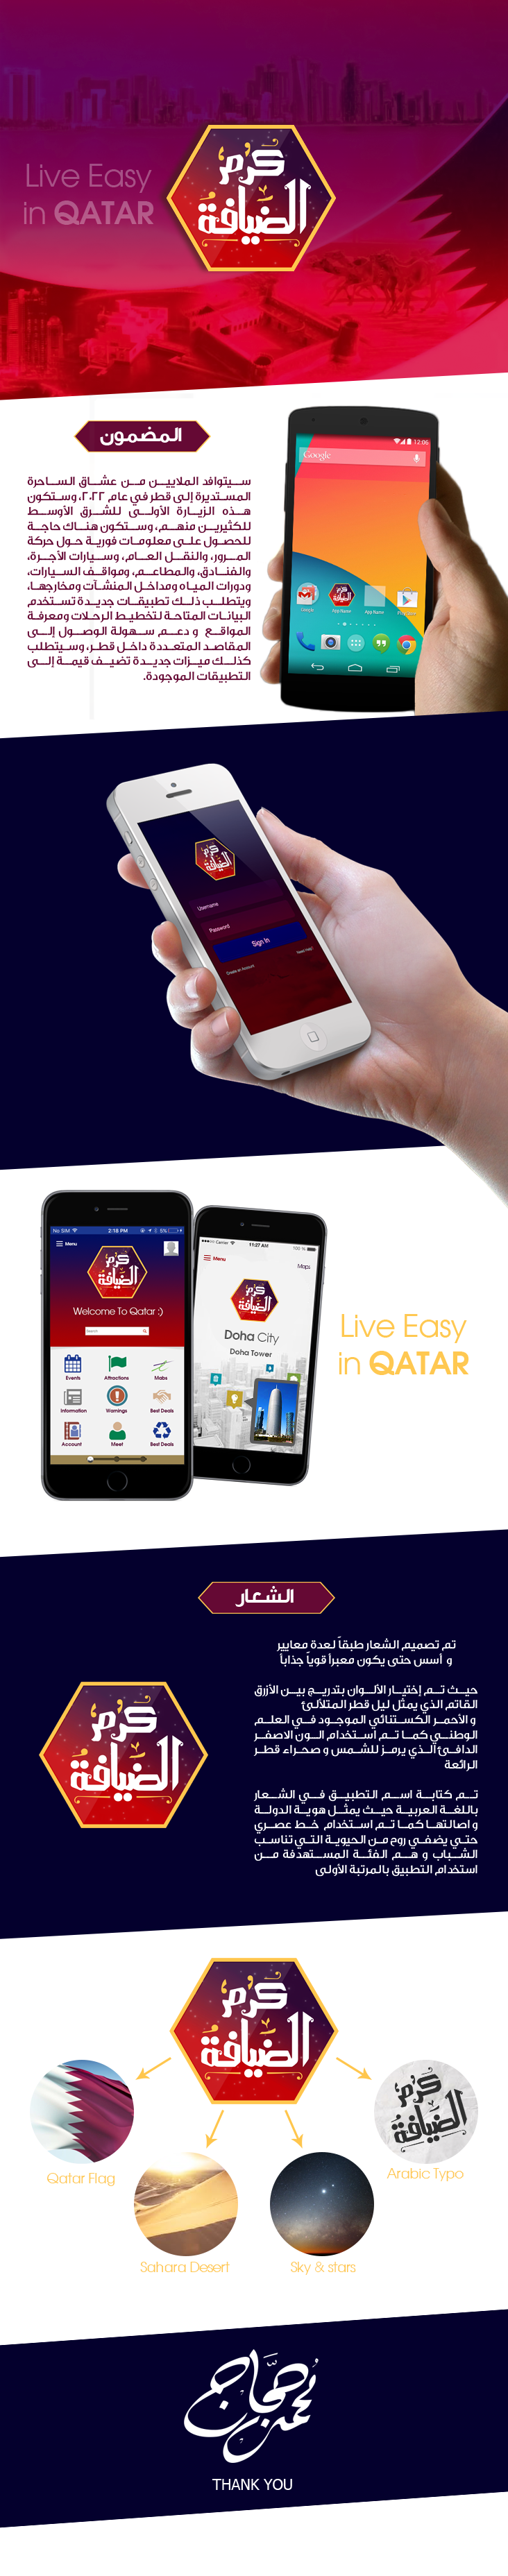 Qatar football world cup mobile application android ios soccer logo